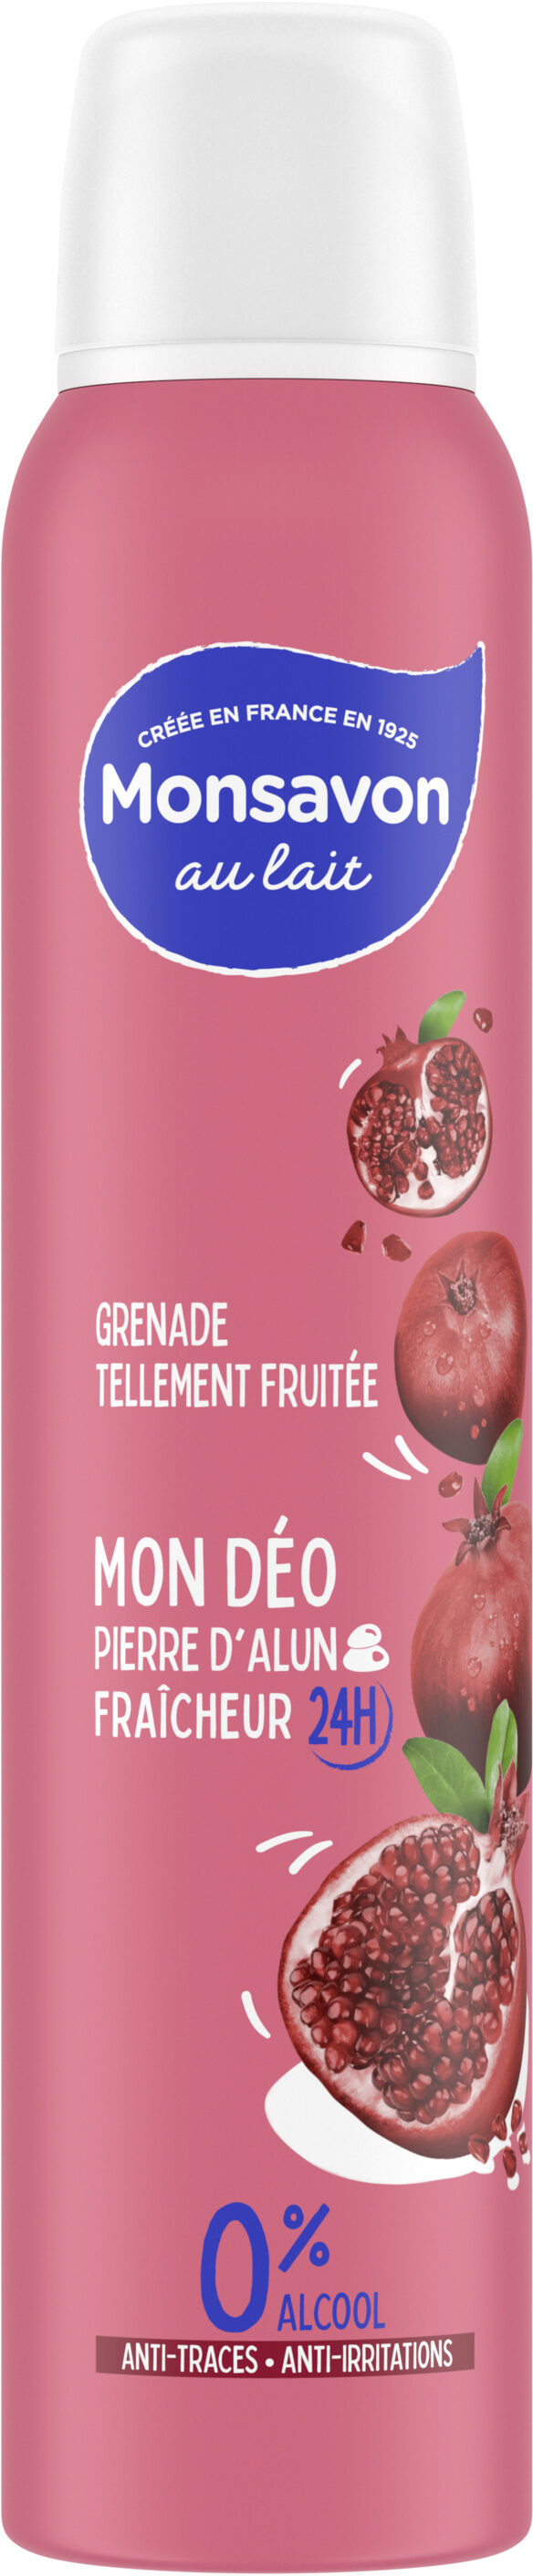 MONSAVON Déodorant Femme Spray Grenade Tellement Fraîche 200ml - Product - fr